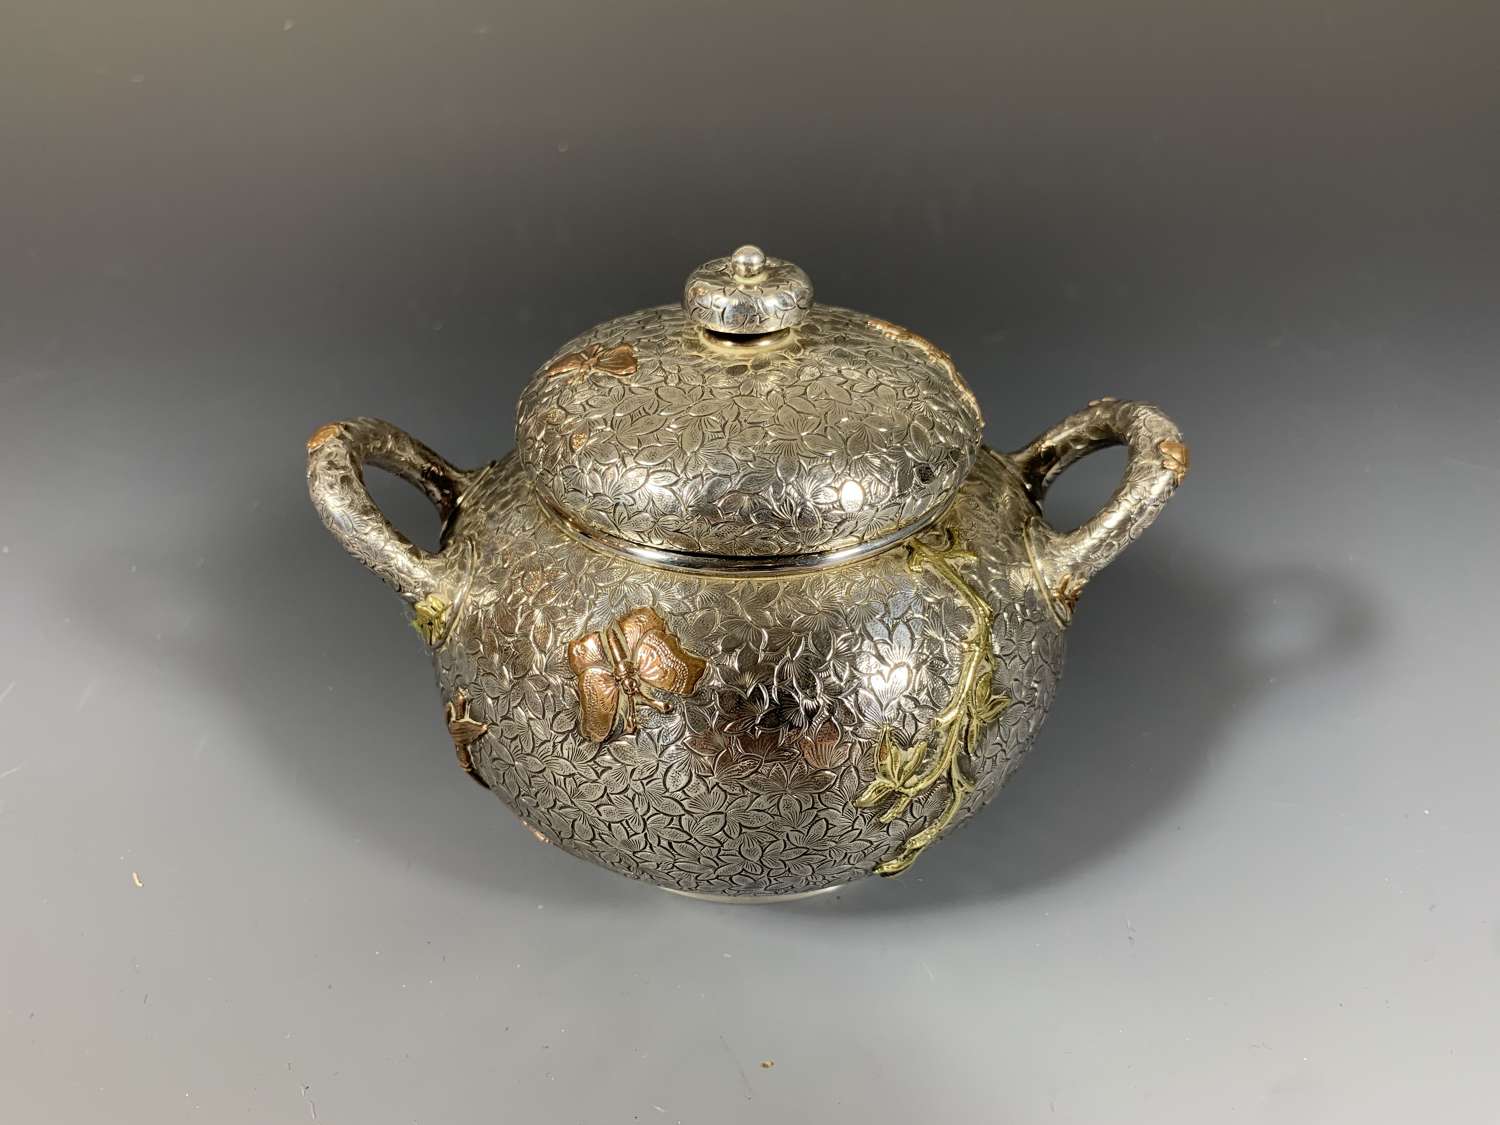 A rare mixed metal sugar bowl by Dominick & Haff circa 1880